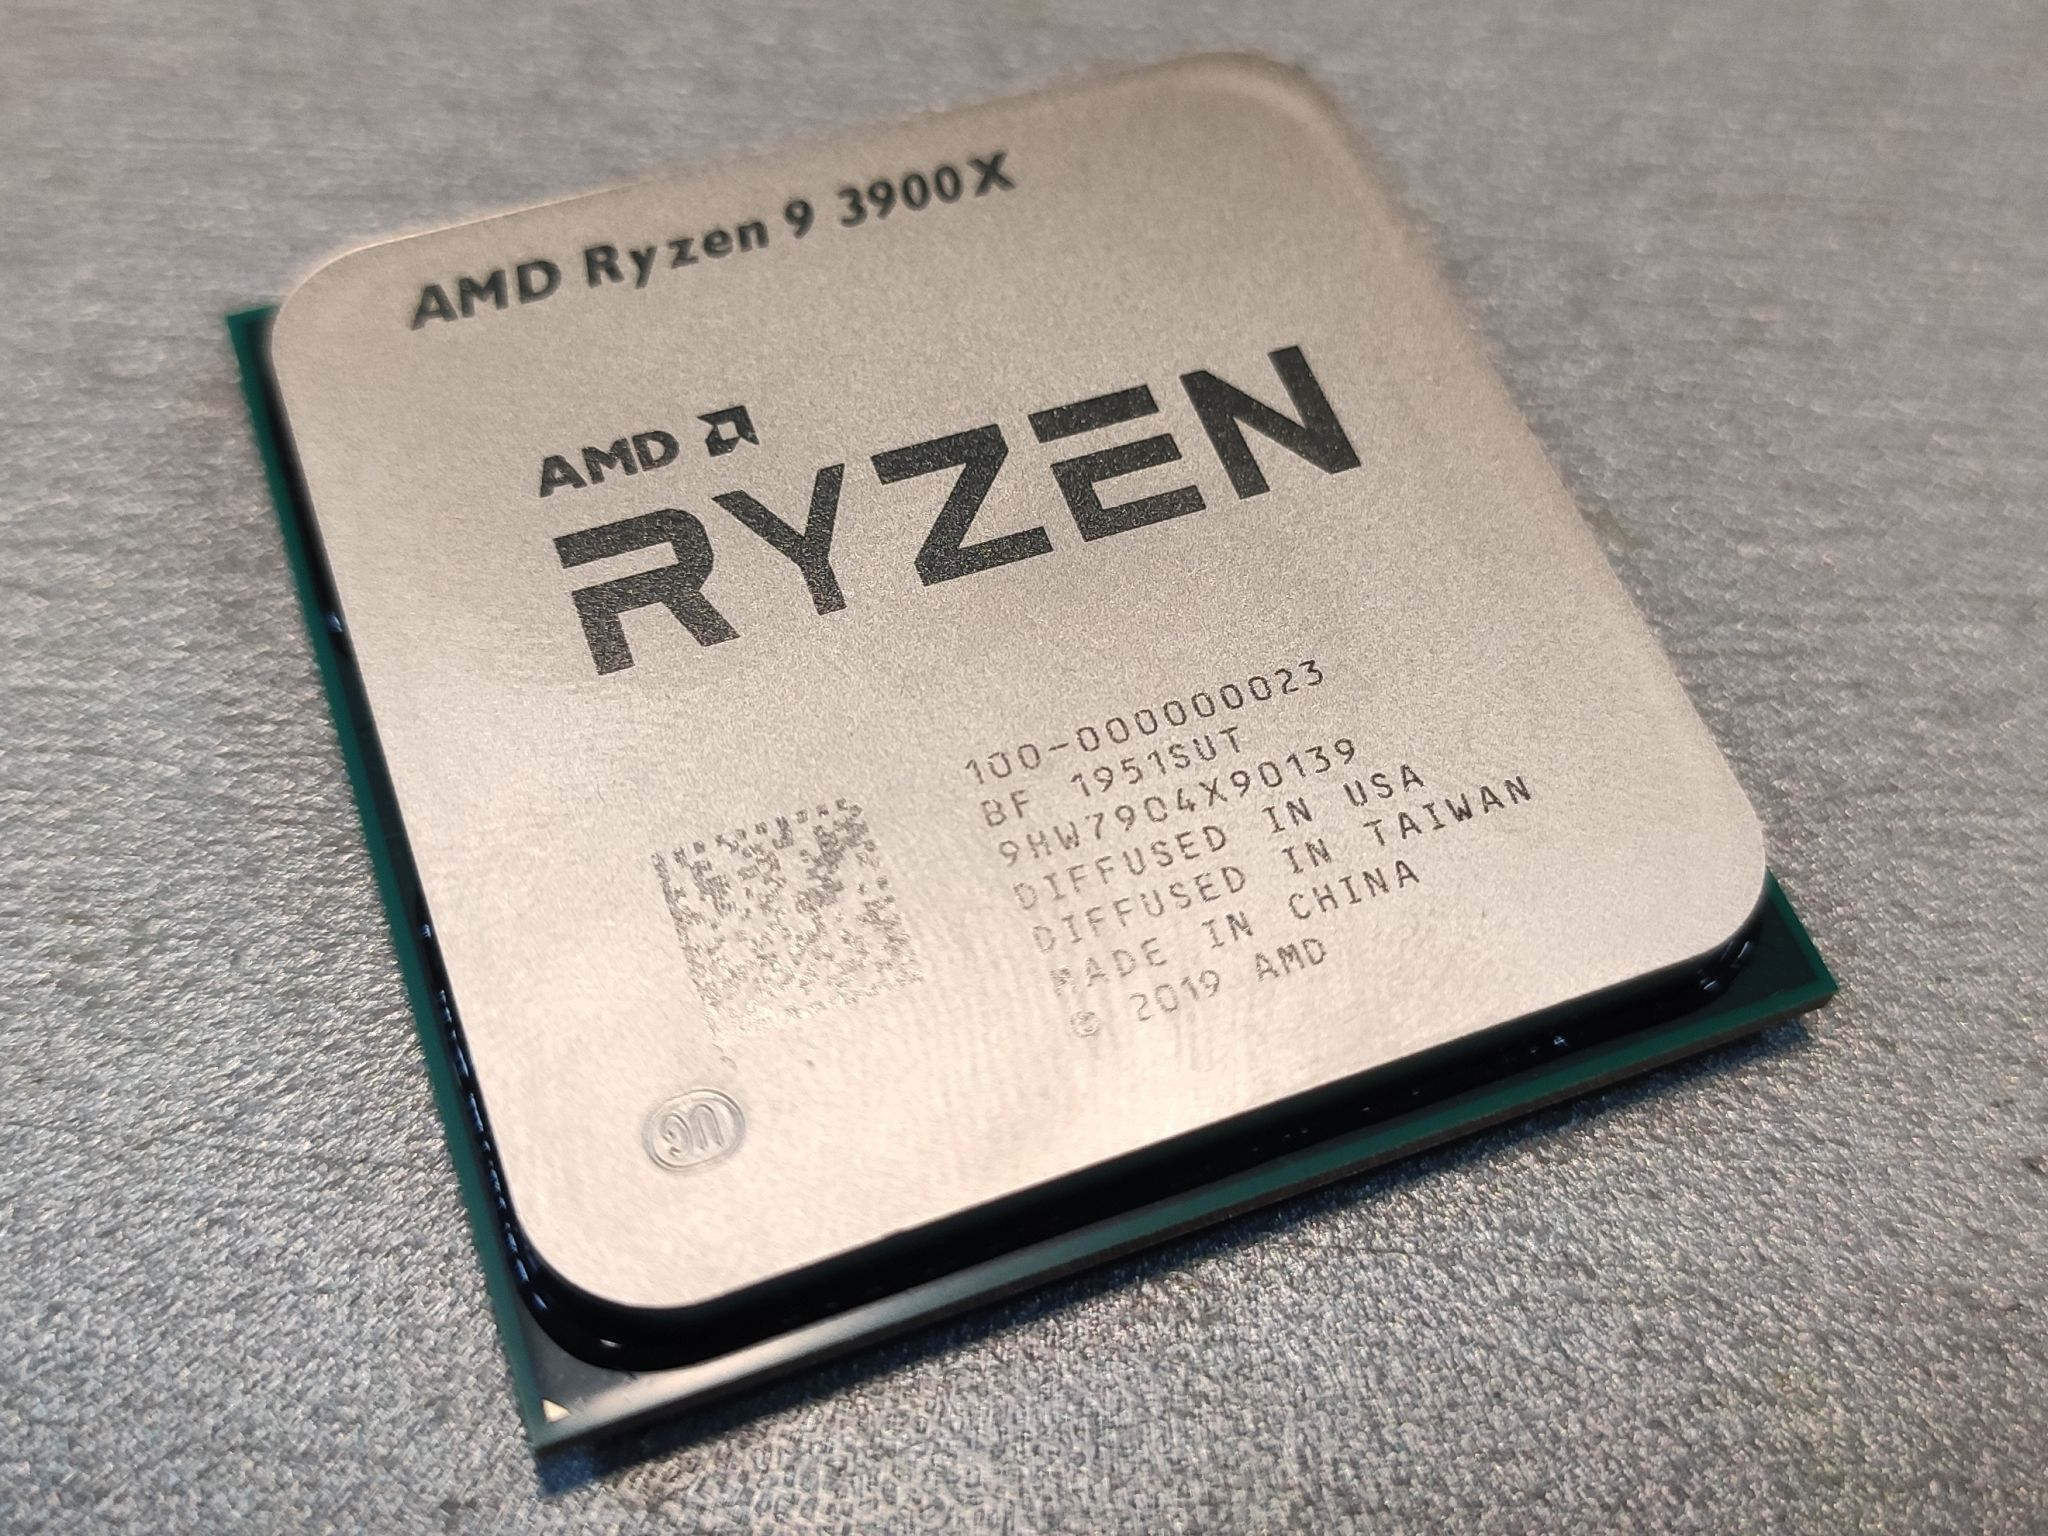 Райзен 9 купить. Ryzen 9 3900x. Процессор AMD Ryzen 9 3900x. Процессор AMD Ryzen 9 5950x OEM. Процессор AMD Ryzen 9 3950x OEM.